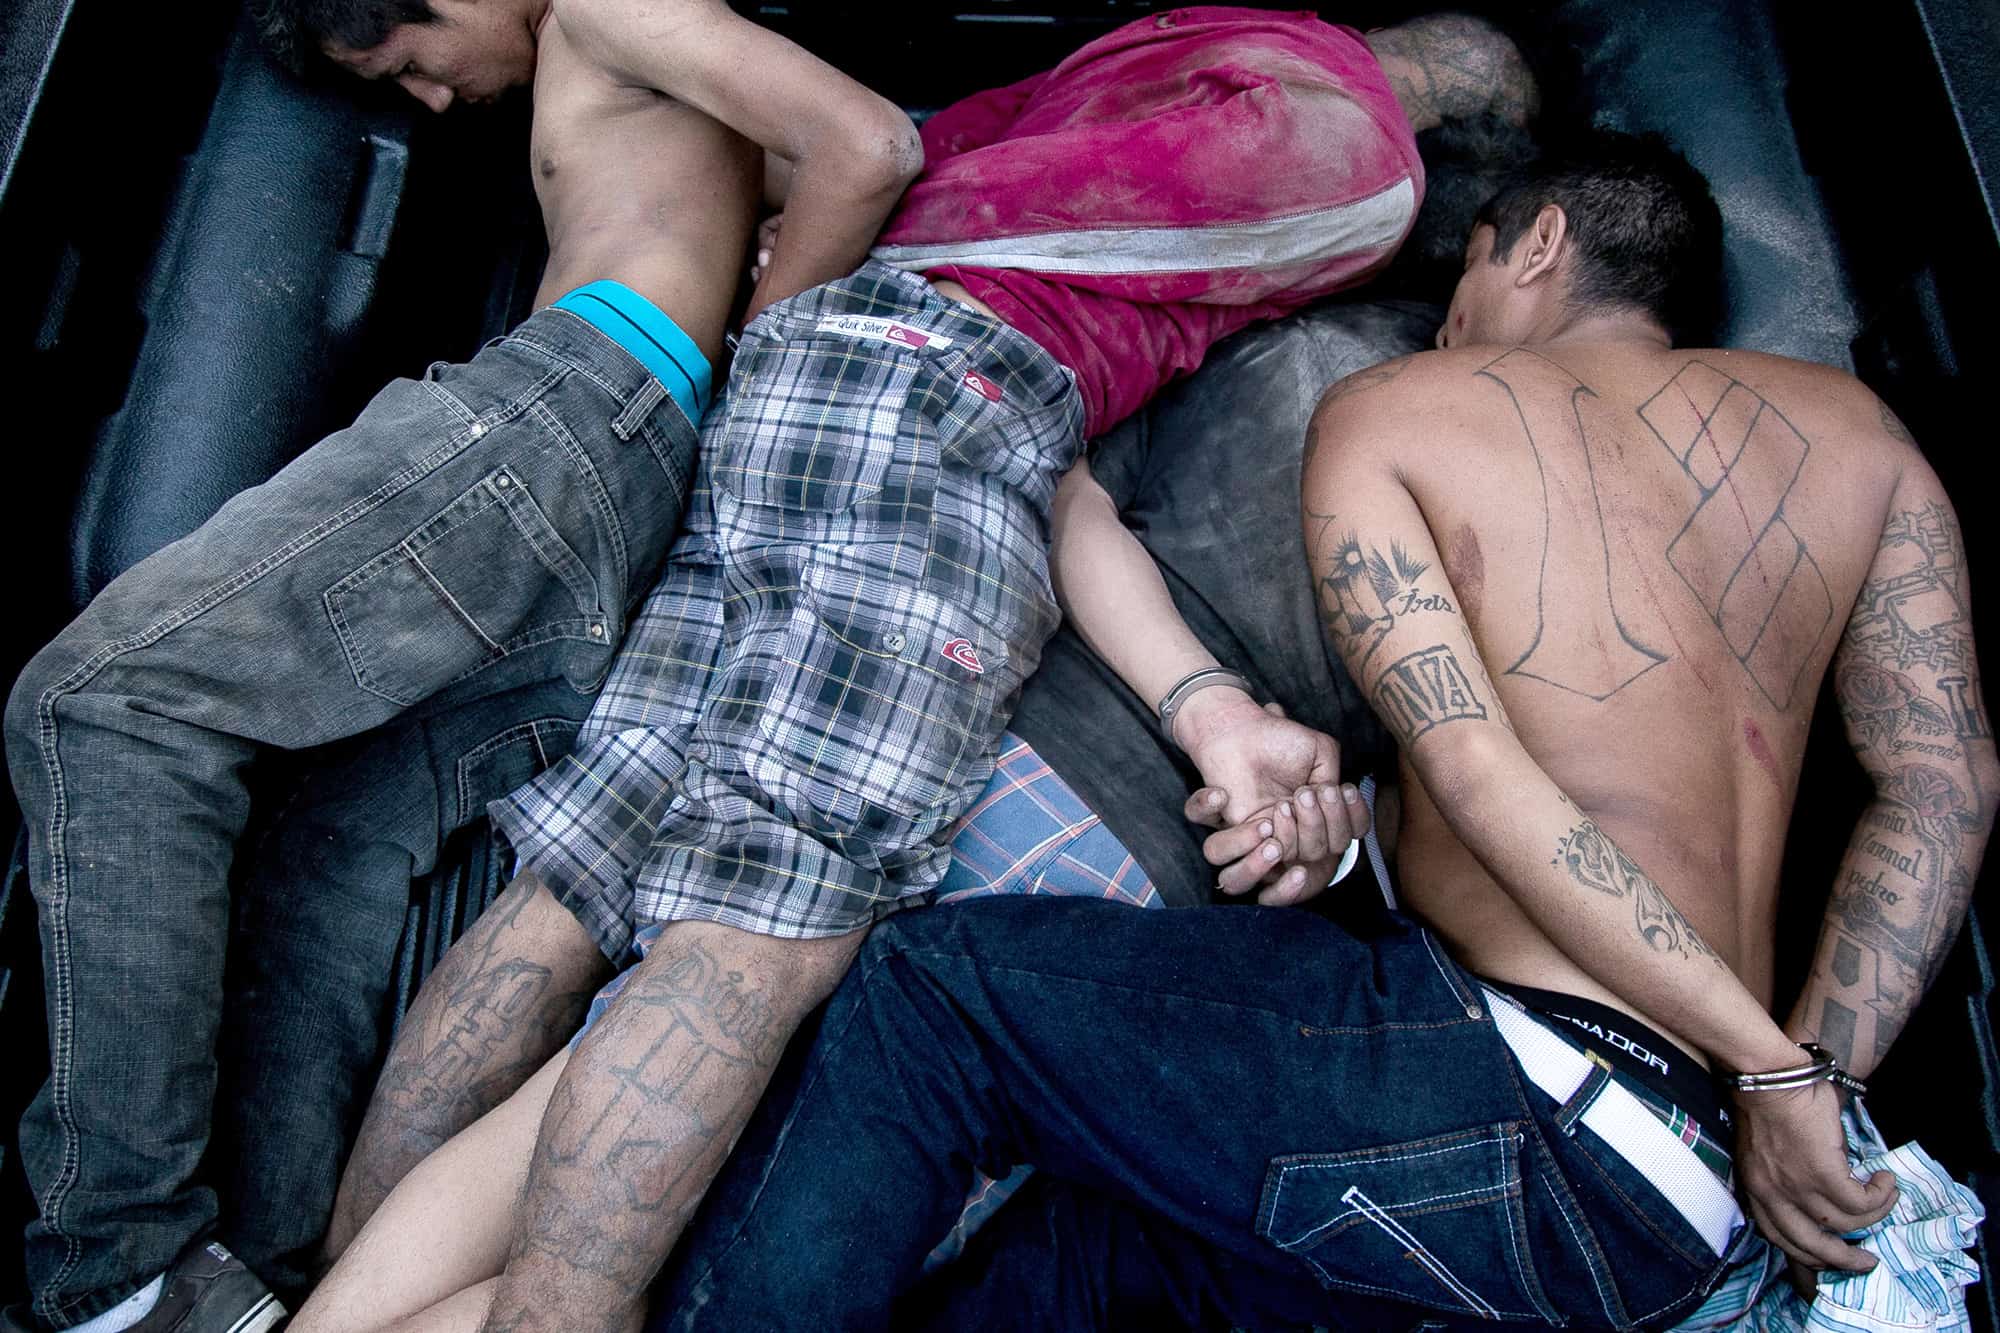 Four El Salvador gang members are captured by anti-gang policemen.